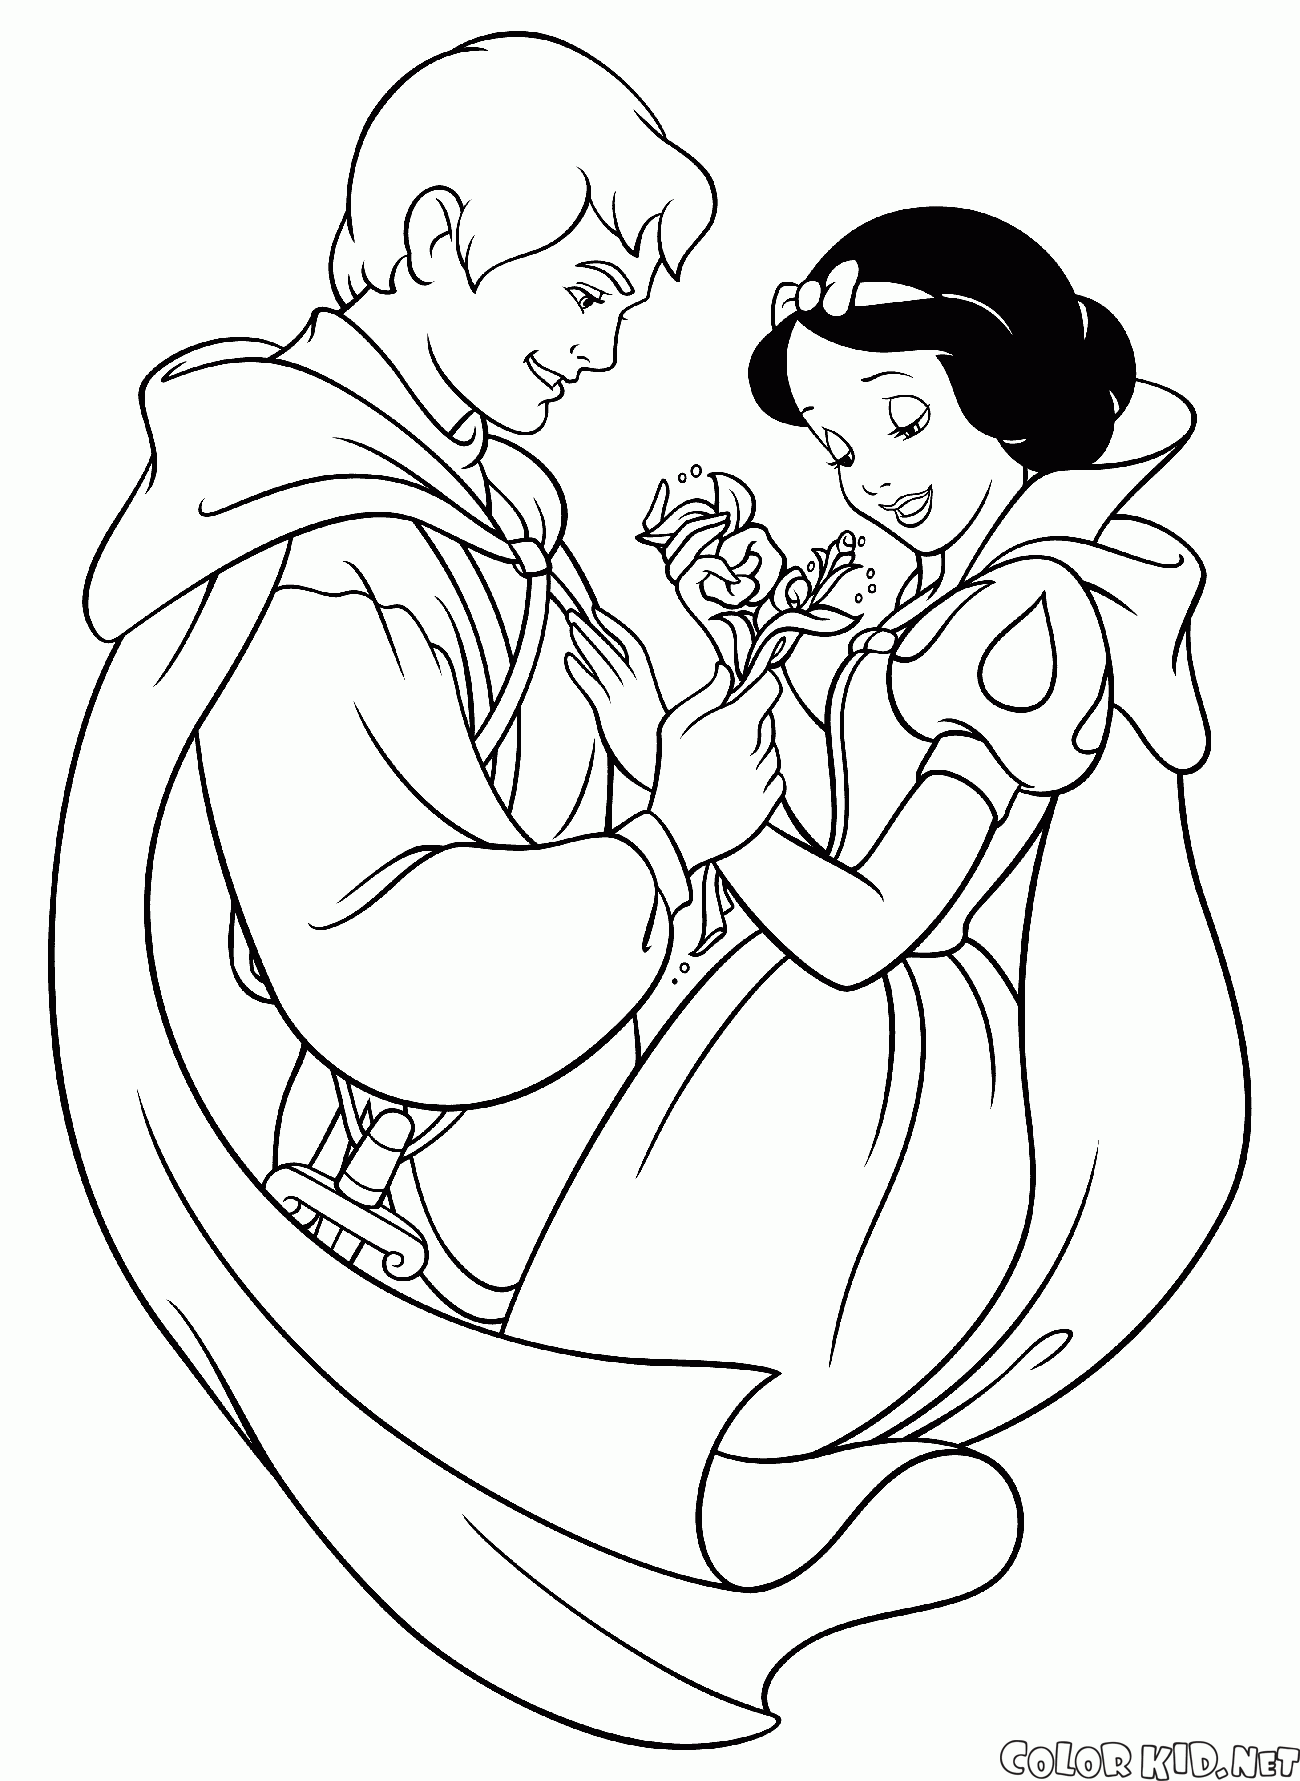 Príncipe está apaixonado por Branca de Neve